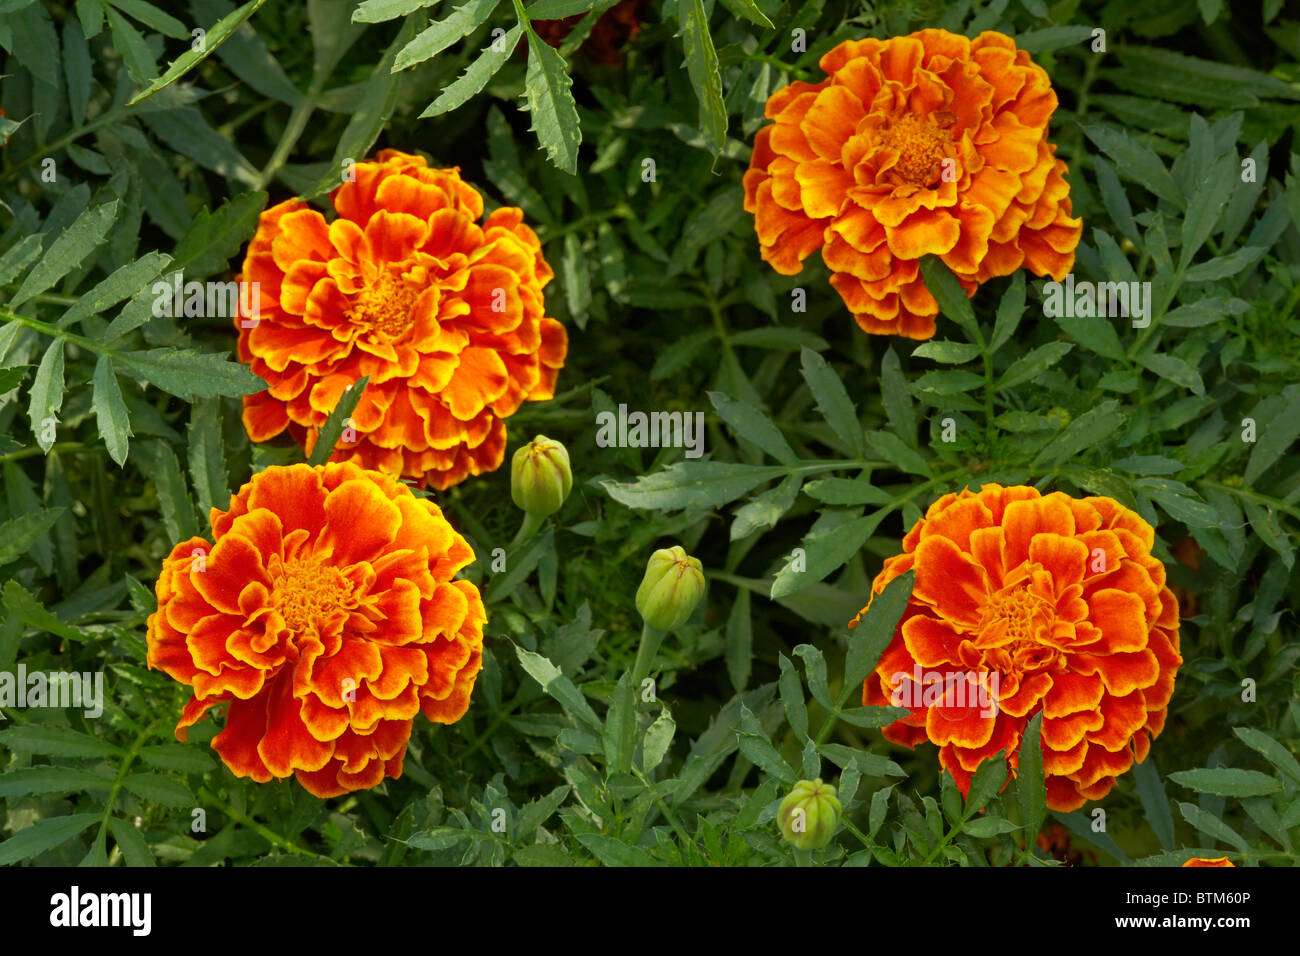 French Marigold. Scientific name: Tagetes patula. Stock Photo